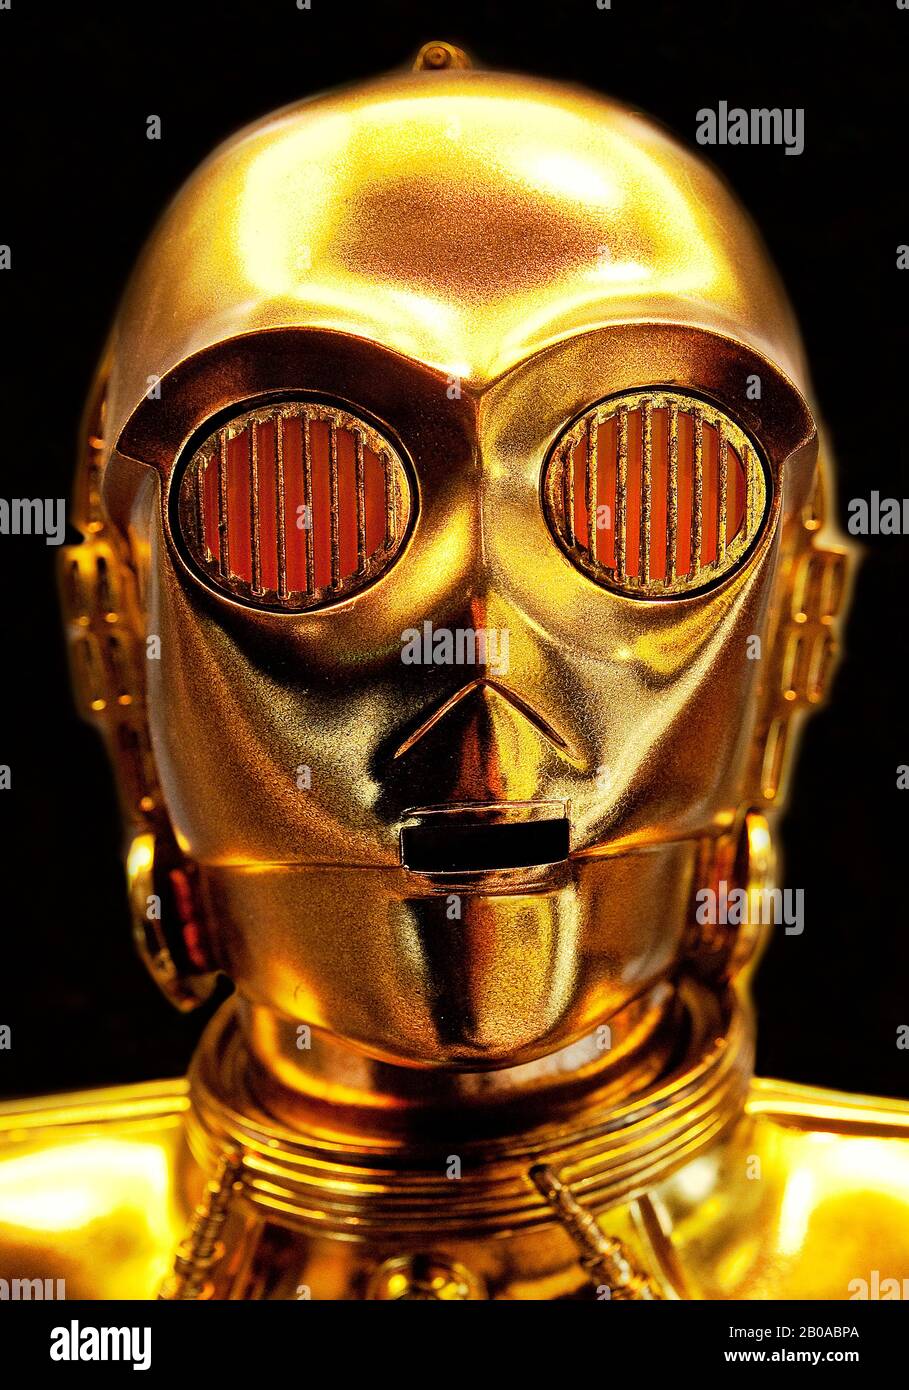 C-3PO, See-Threepio, protocol droid, humanoid robot character from Star Wars  Stock Photo - Alamy